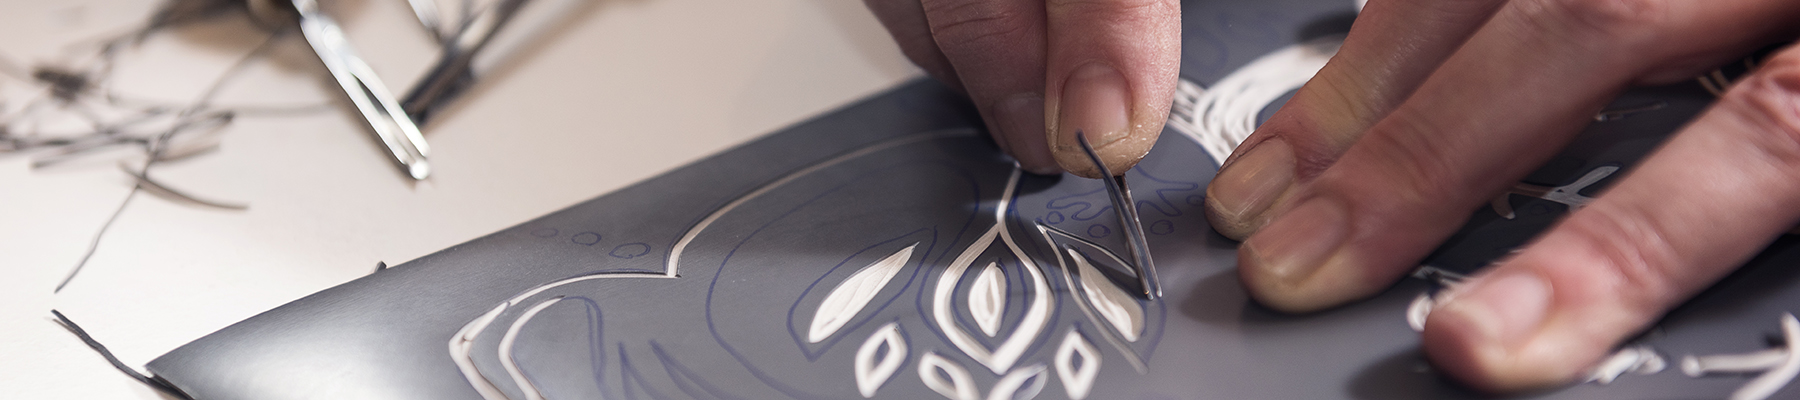 Hands carving a linoleum block to make a print